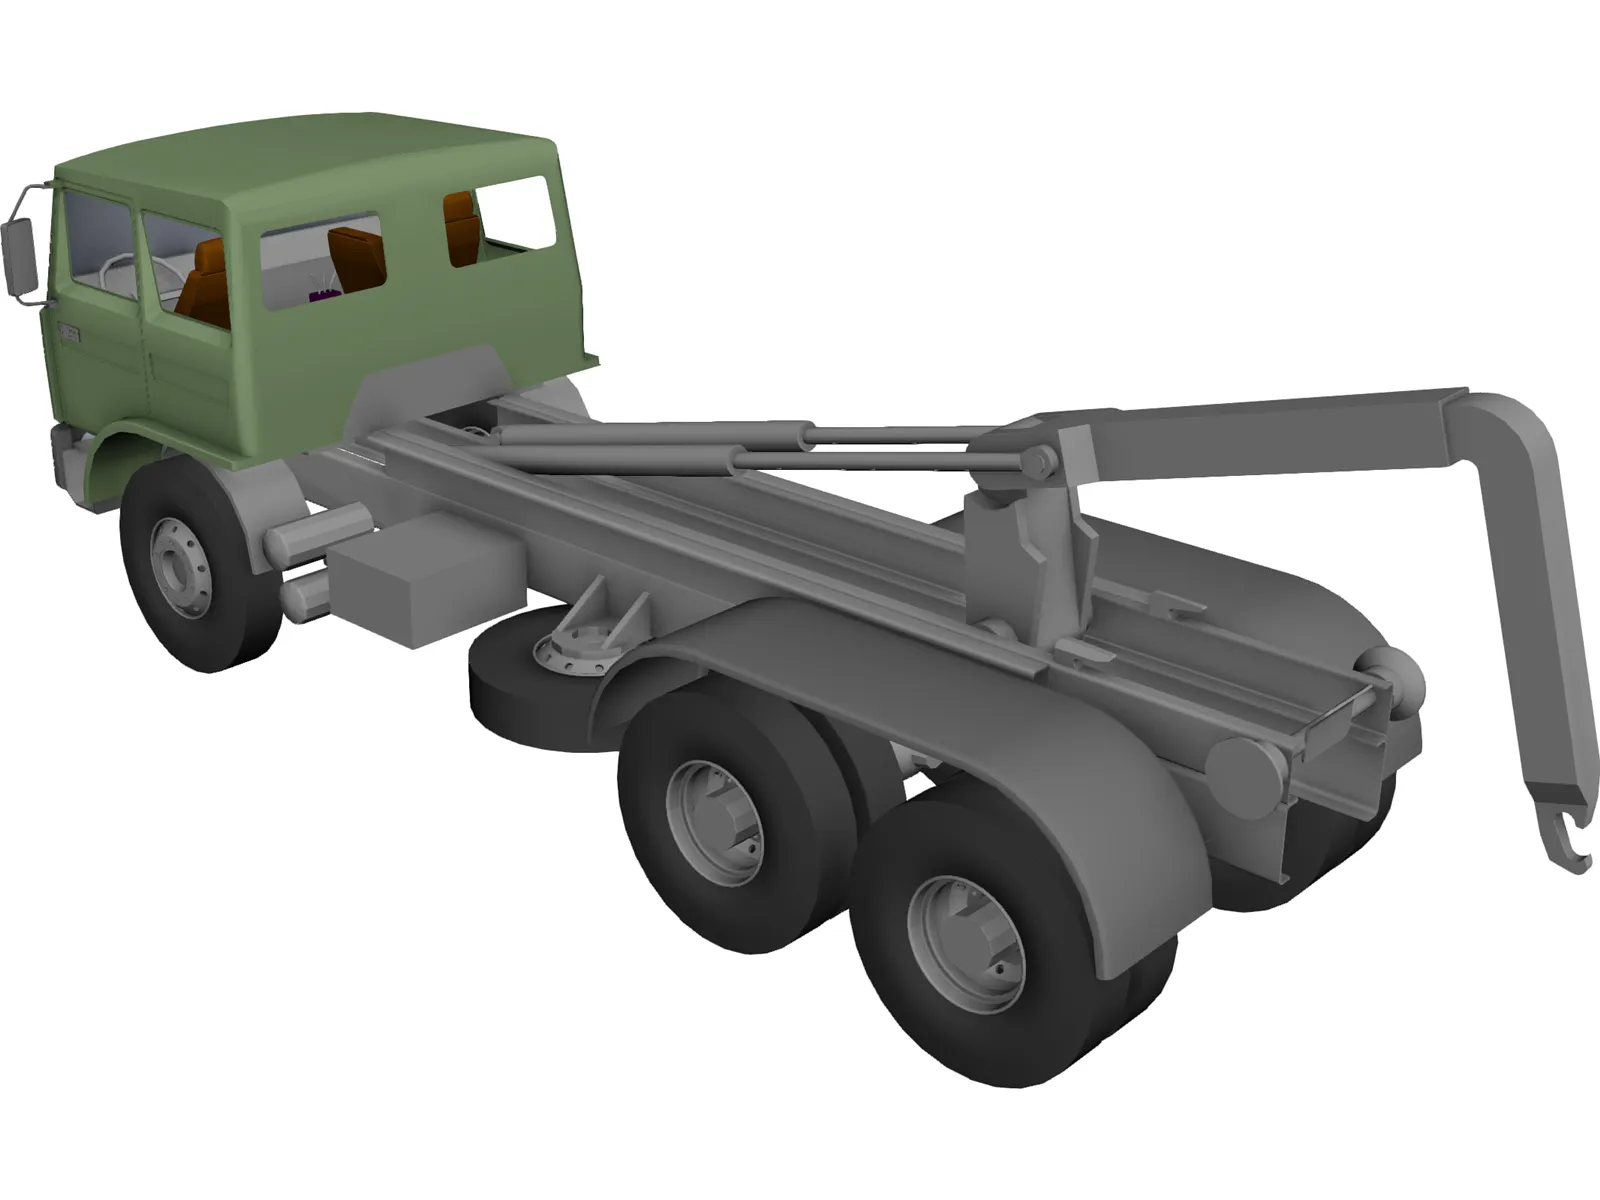 Renault VTL Truck 3D Model